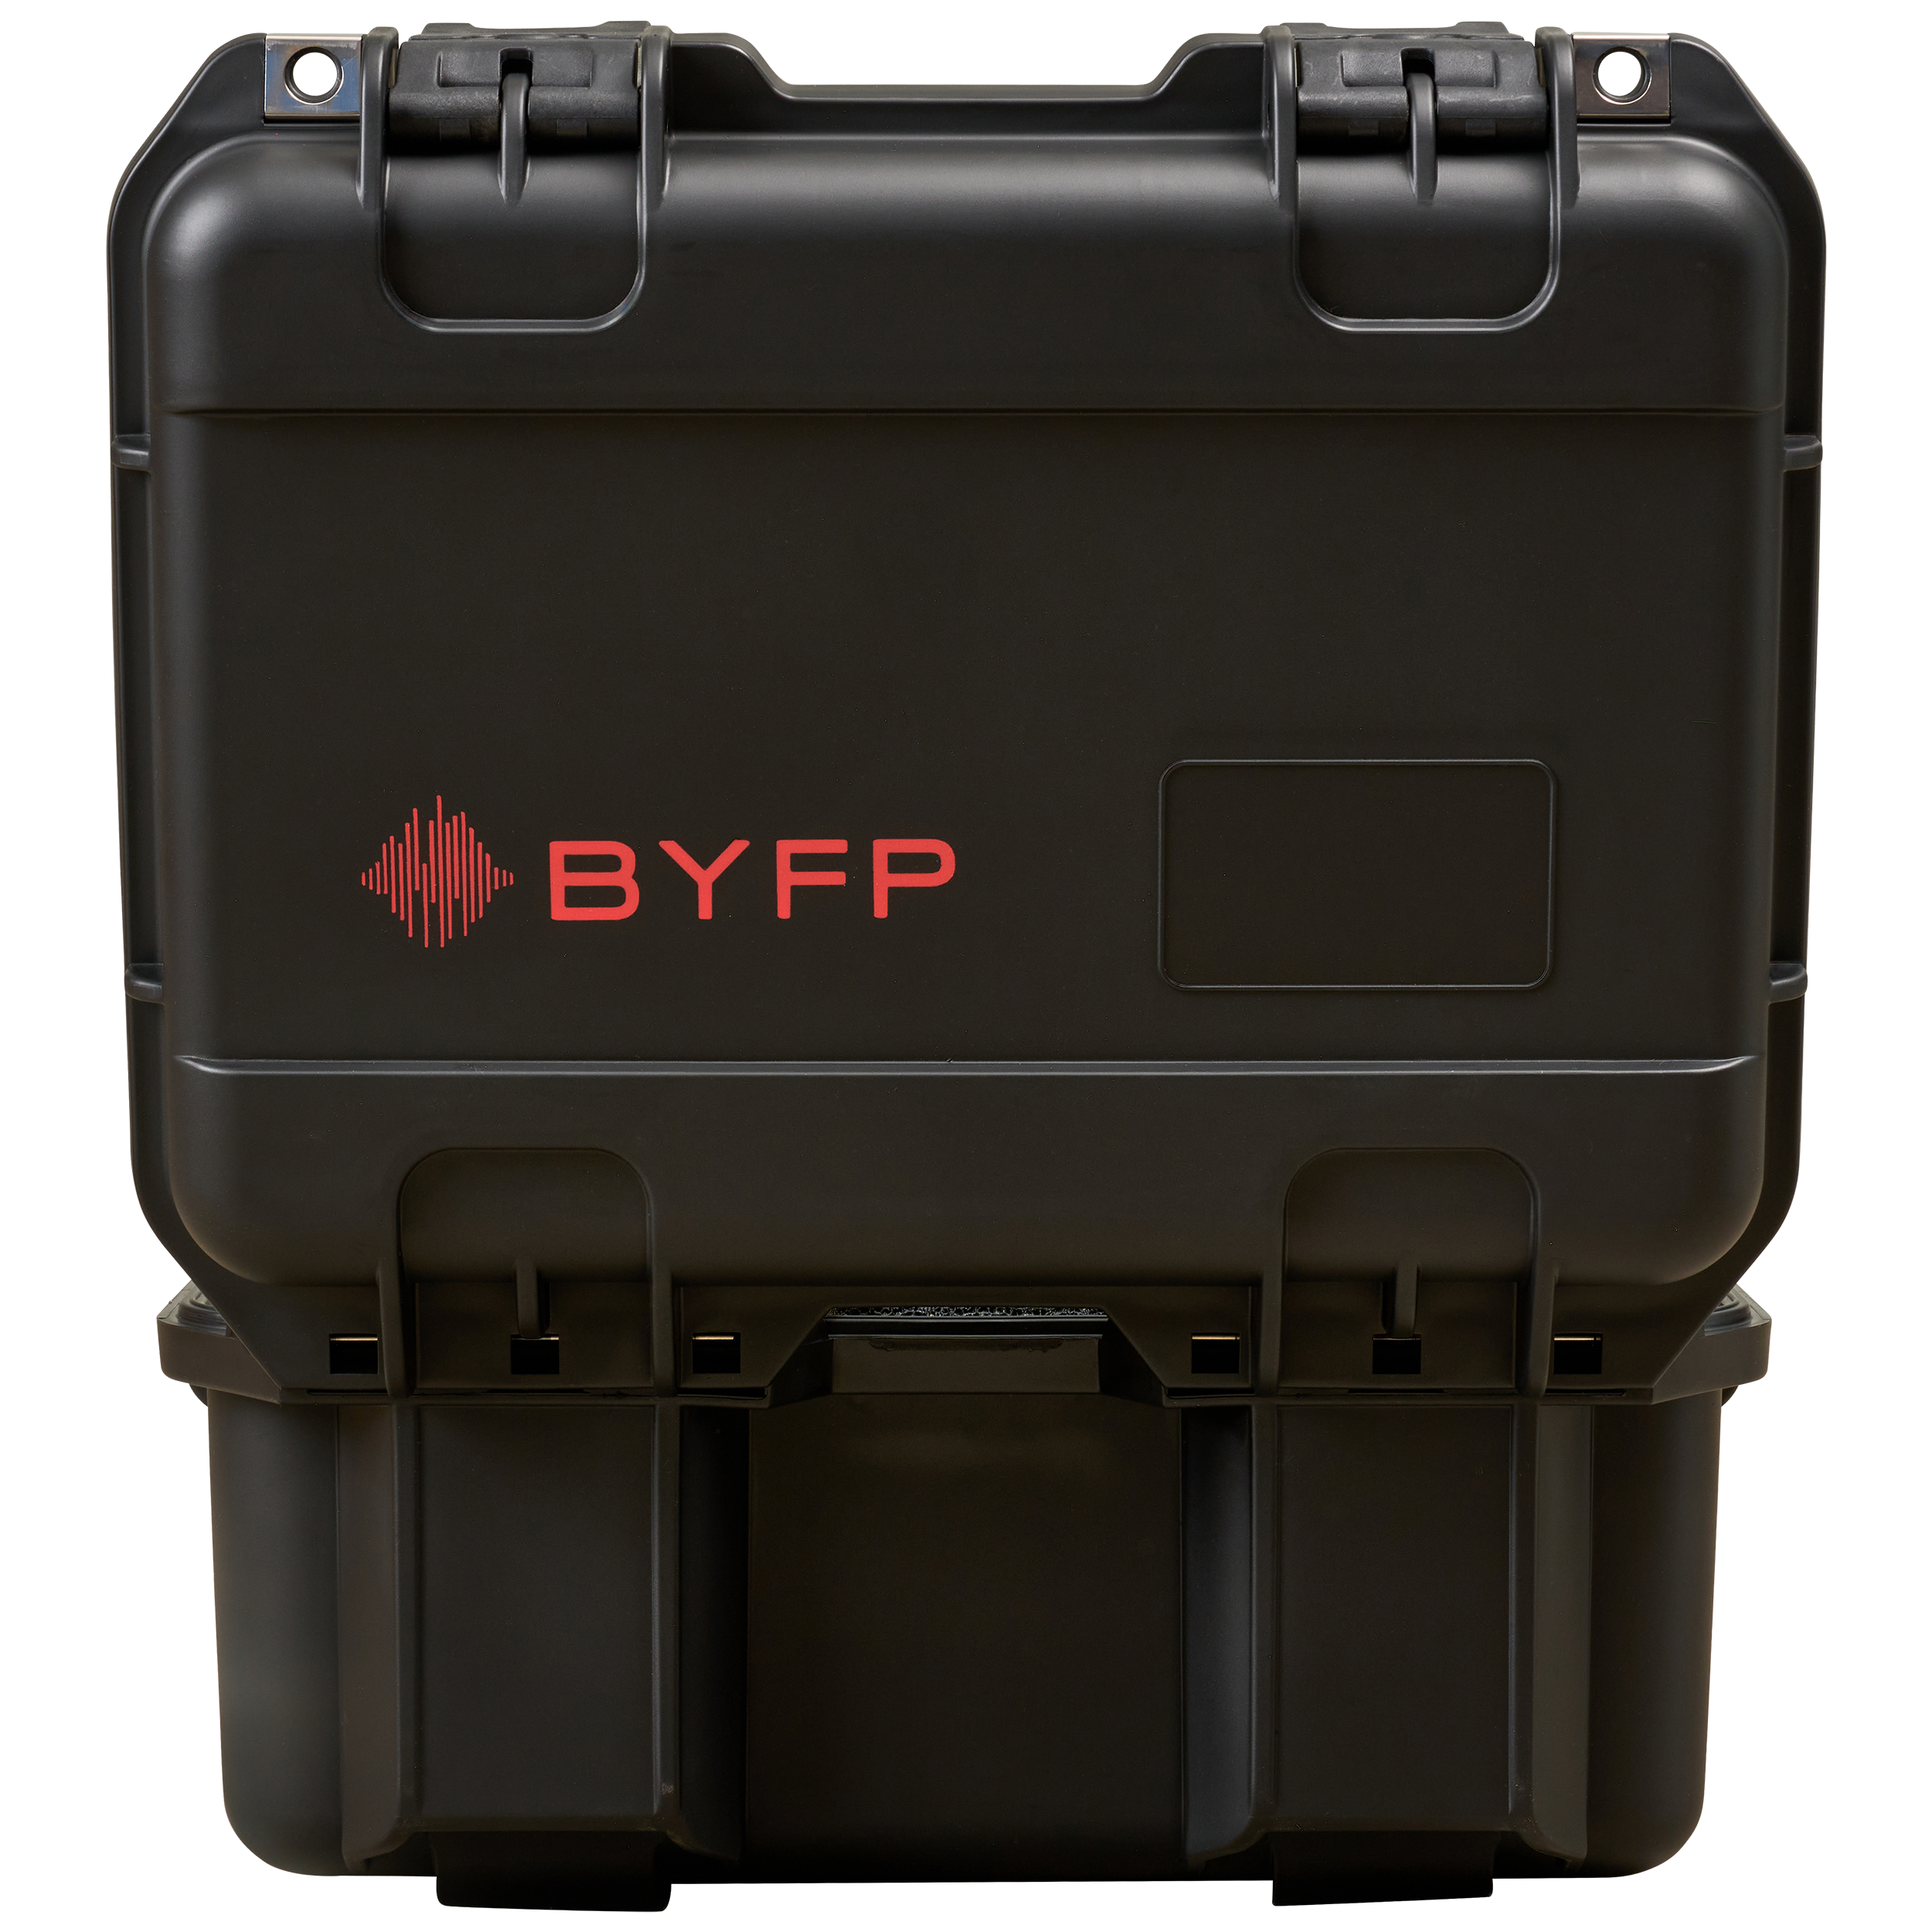 BYFP ipCase for Chauvet D-Fi XLR Pack